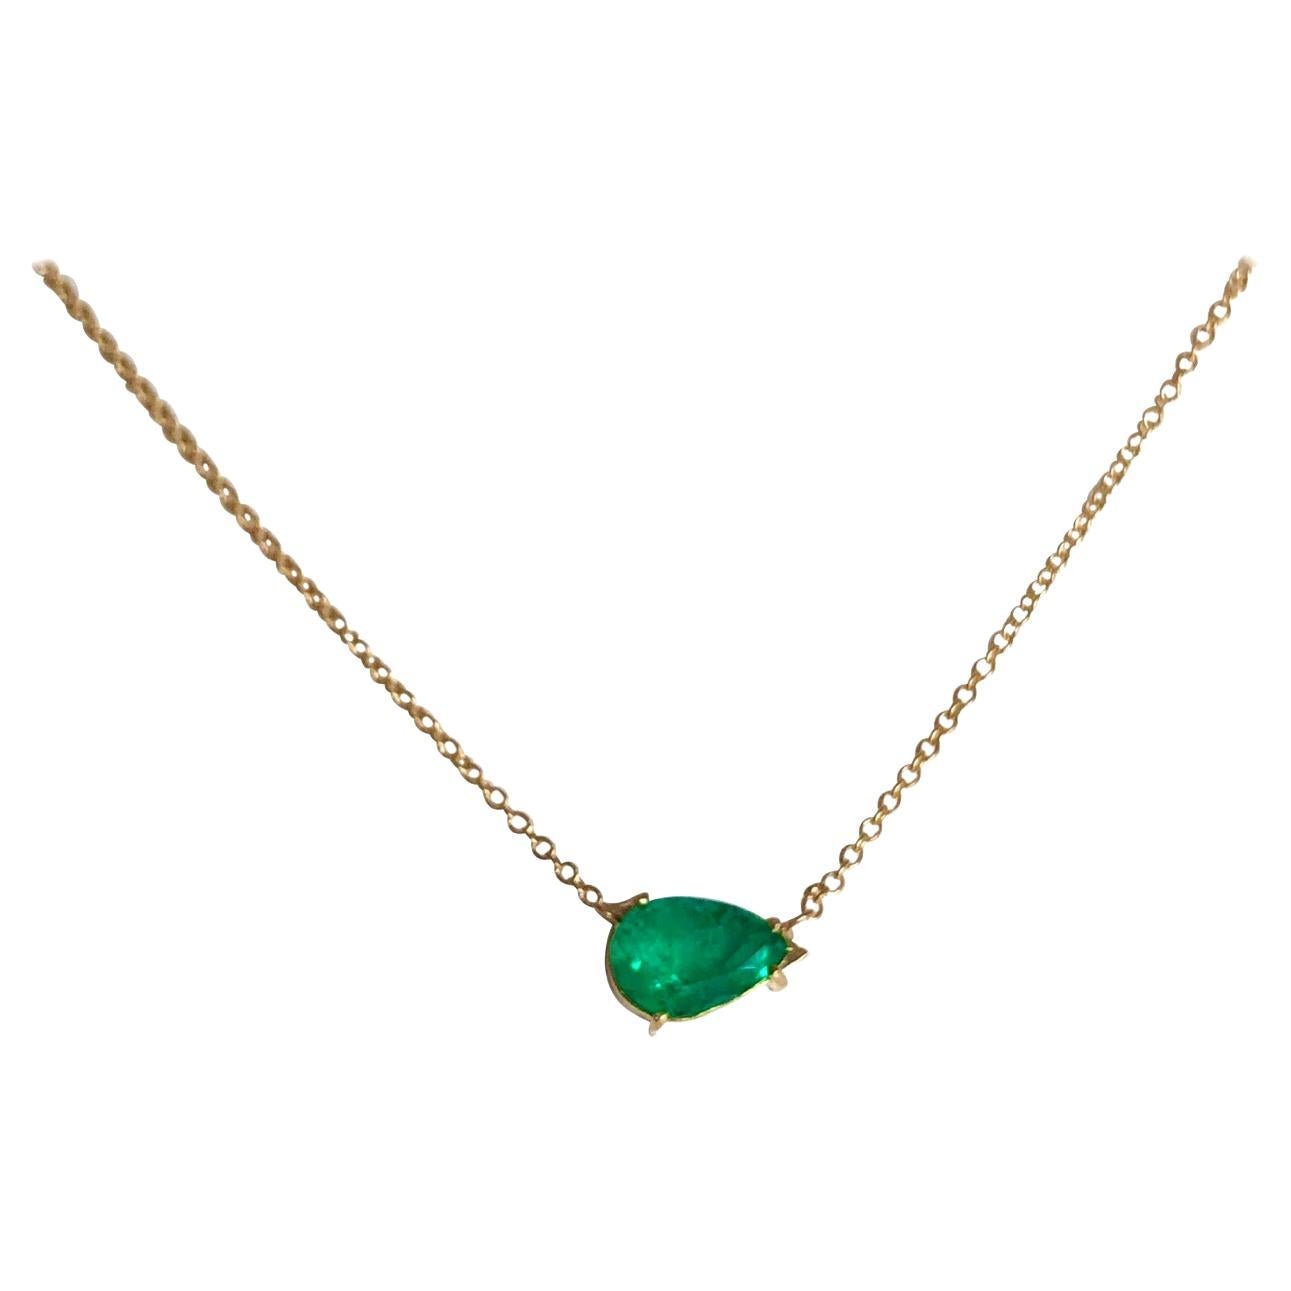 Emeralds Maravellous Colombian Emerald Solitaire Pendant Drop Necklace in 18k